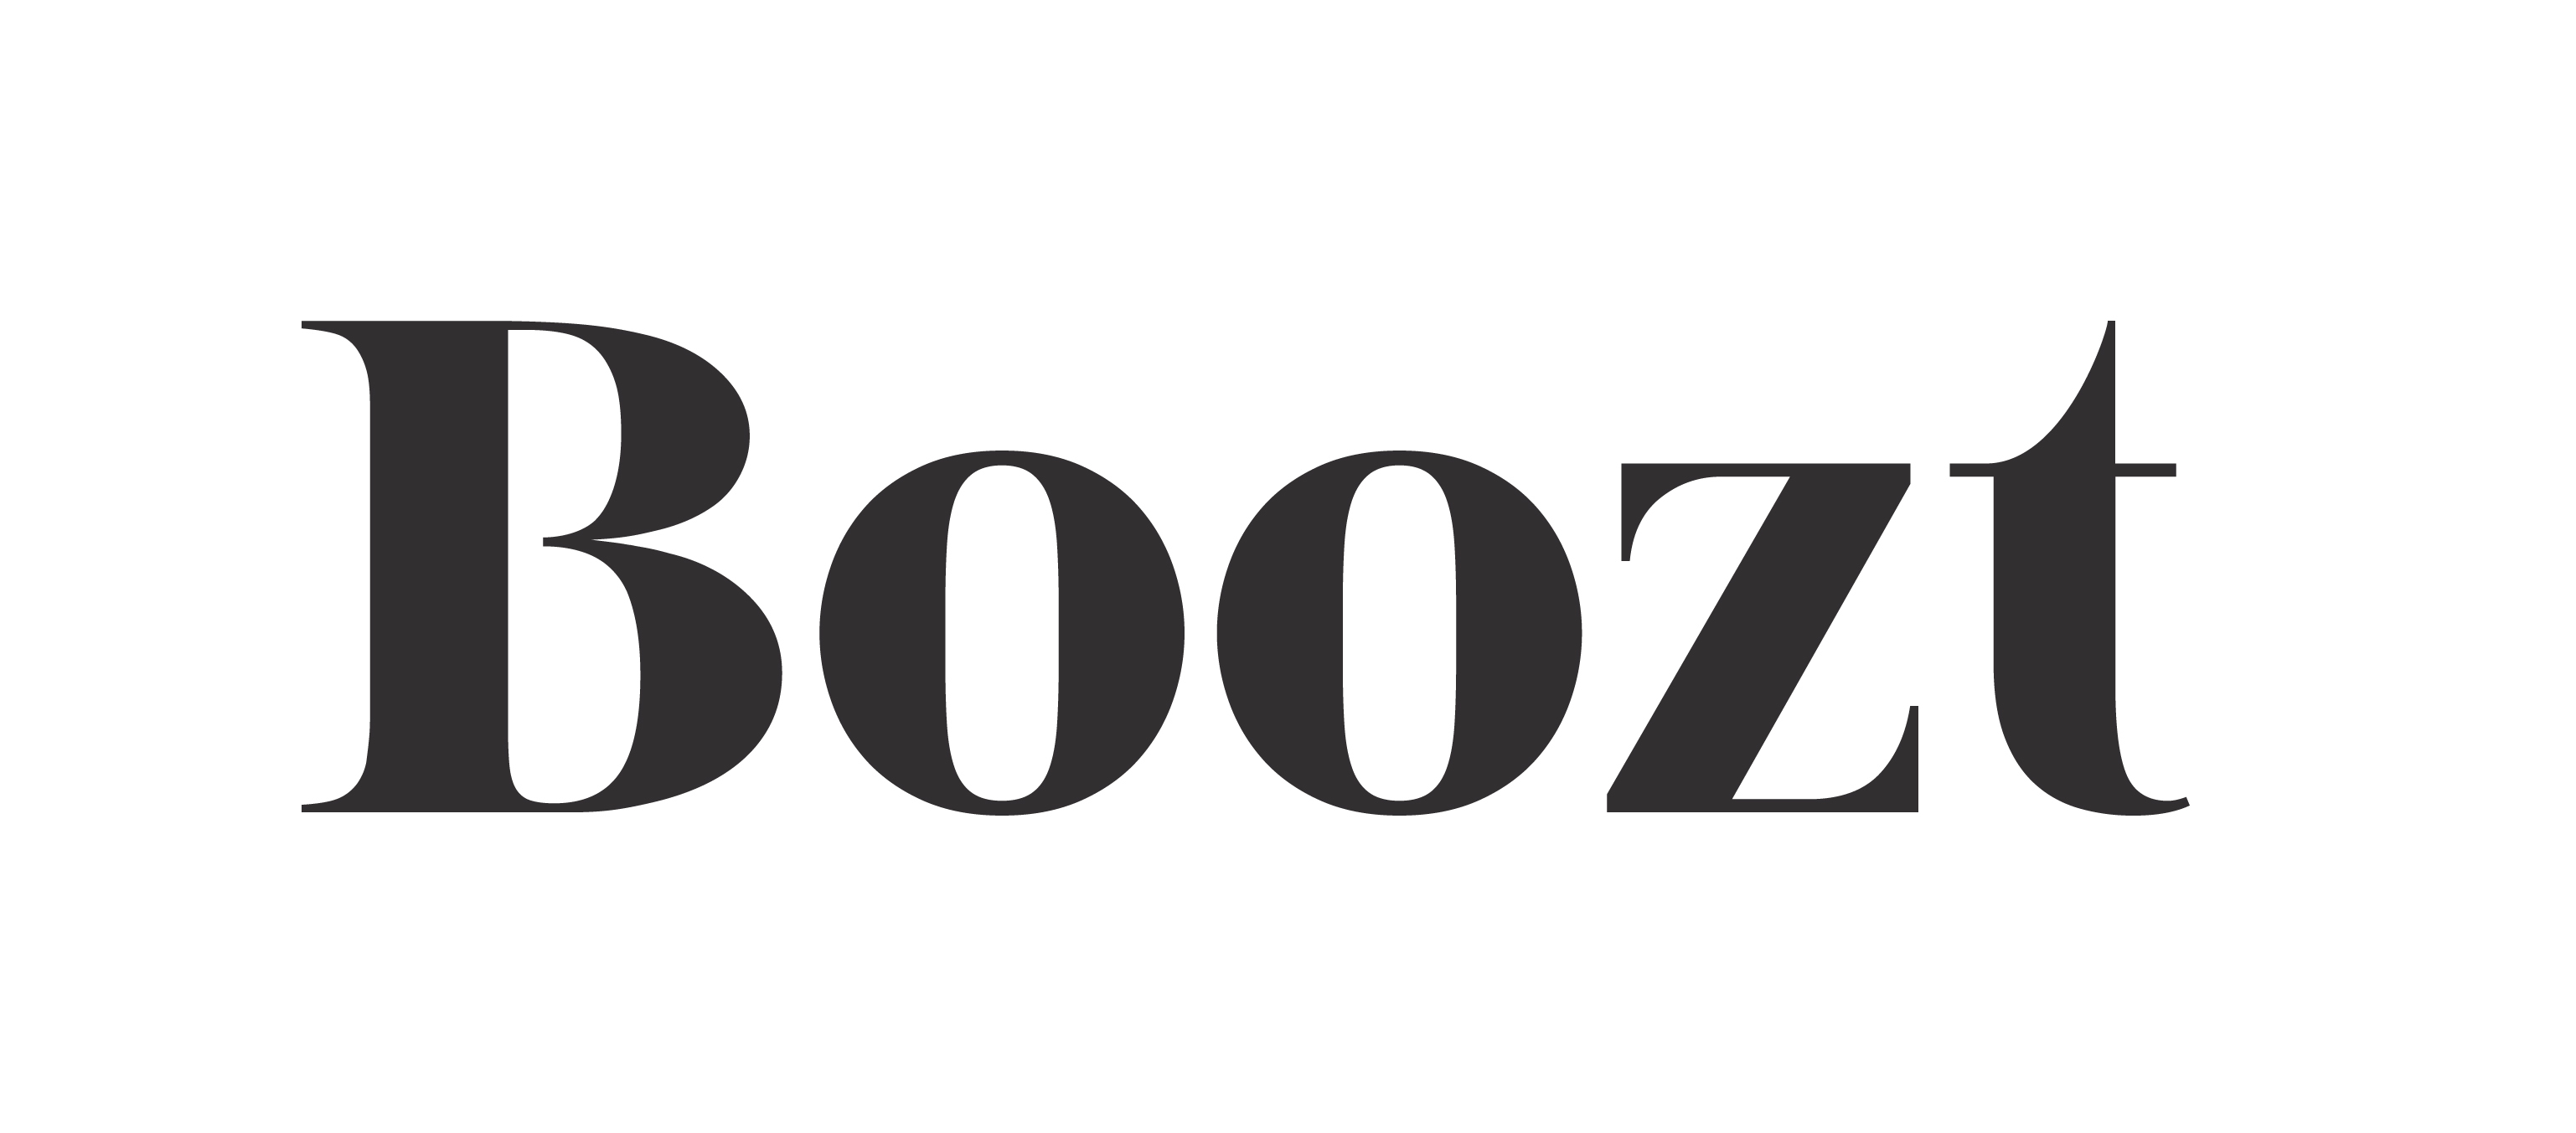 Boozt logo 2